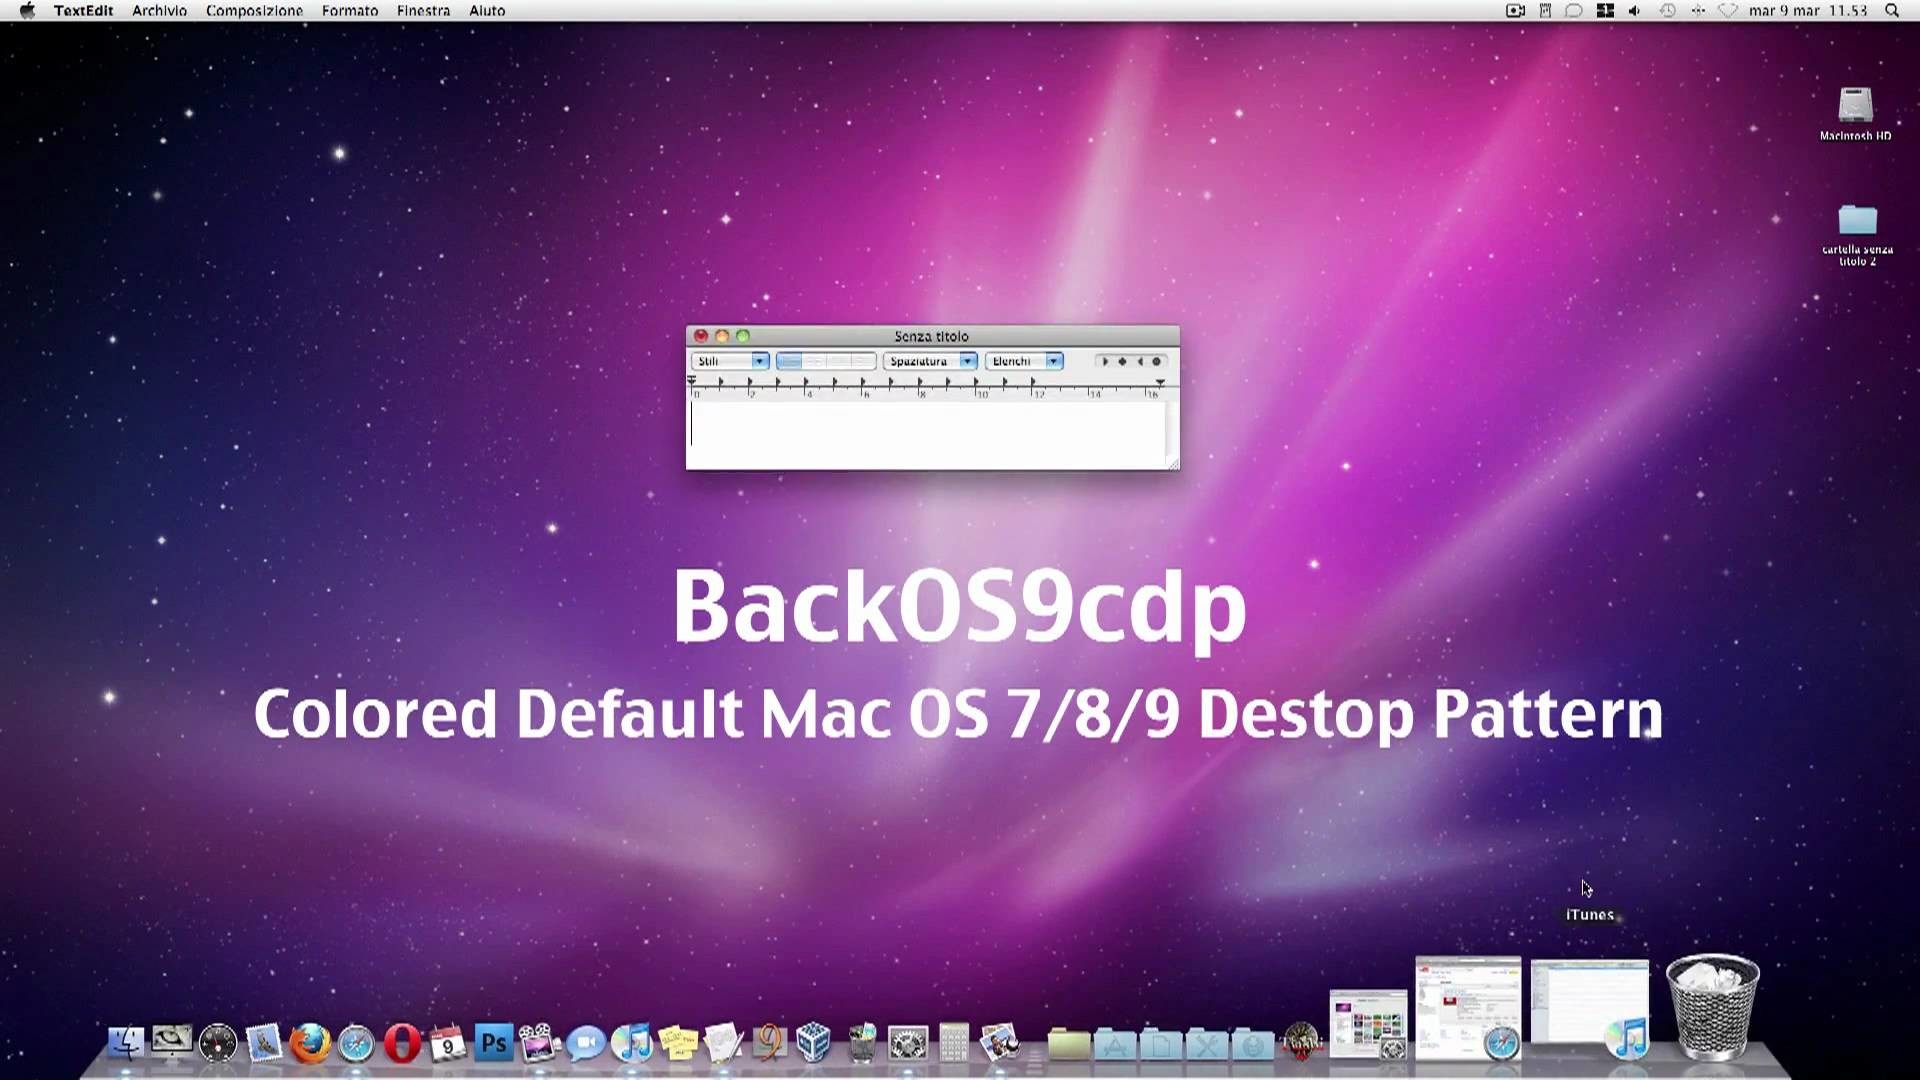 1920x1080 Cult wallpapers- Colored Default Mac OS 7/8/9 Desktop Pattern (BackOS9cdp)